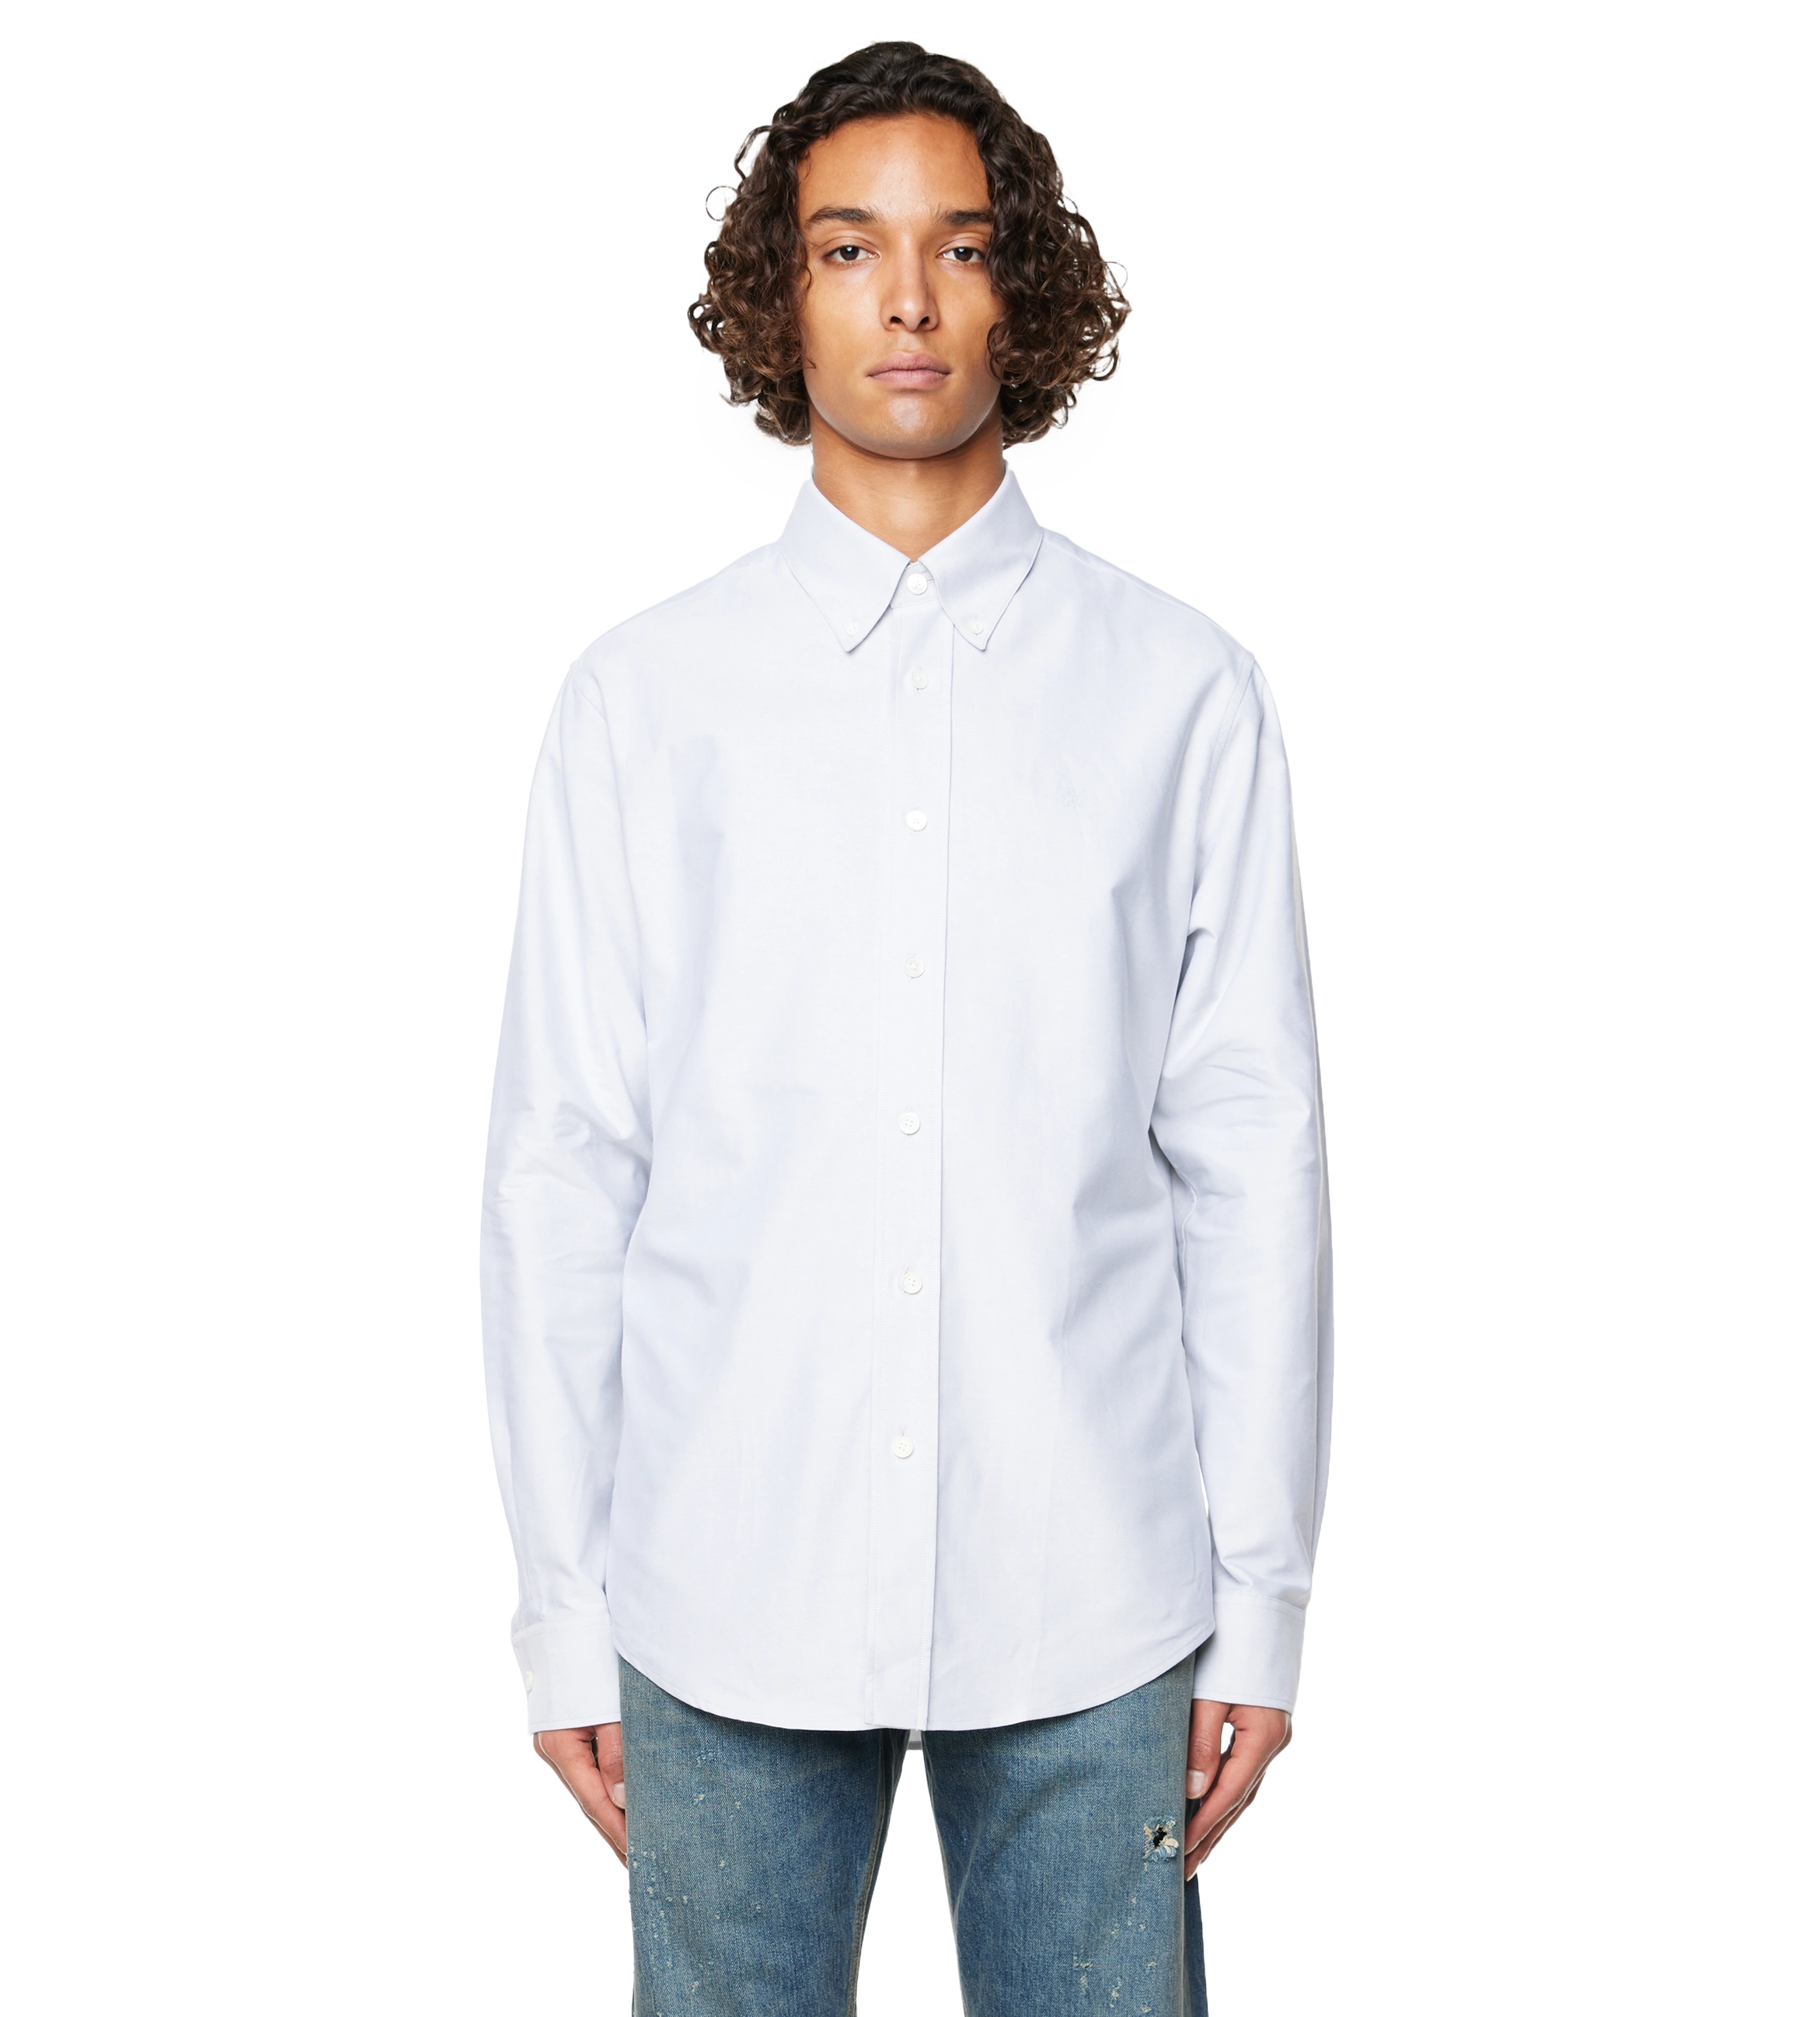 Longsleeve Cotton Shirt Grey